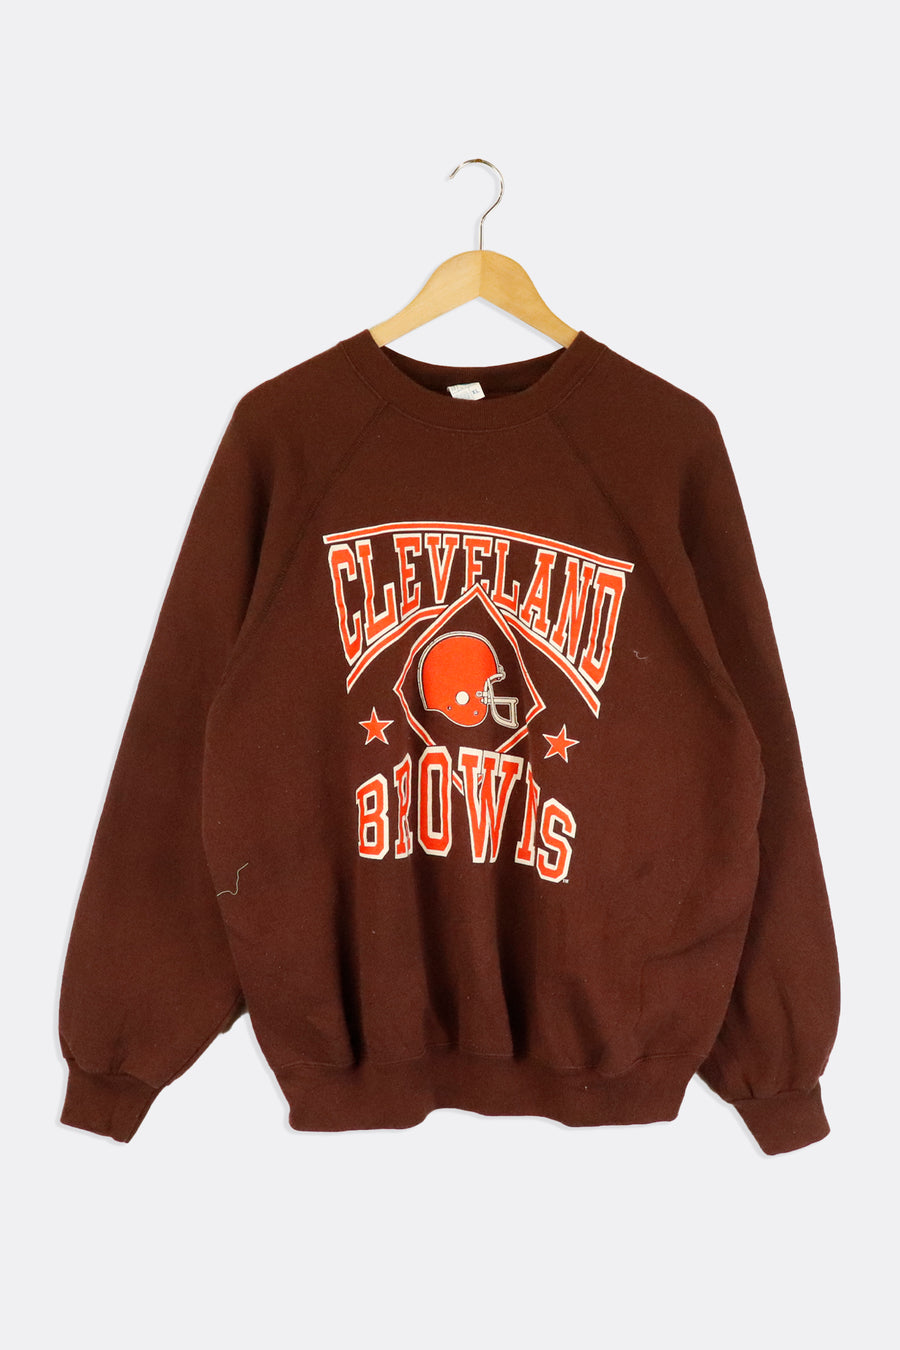 Vintage NFL Cleveland Browns Vinyl Font And Helmet In Team Colours Graphic Sweatshirt Sz XL